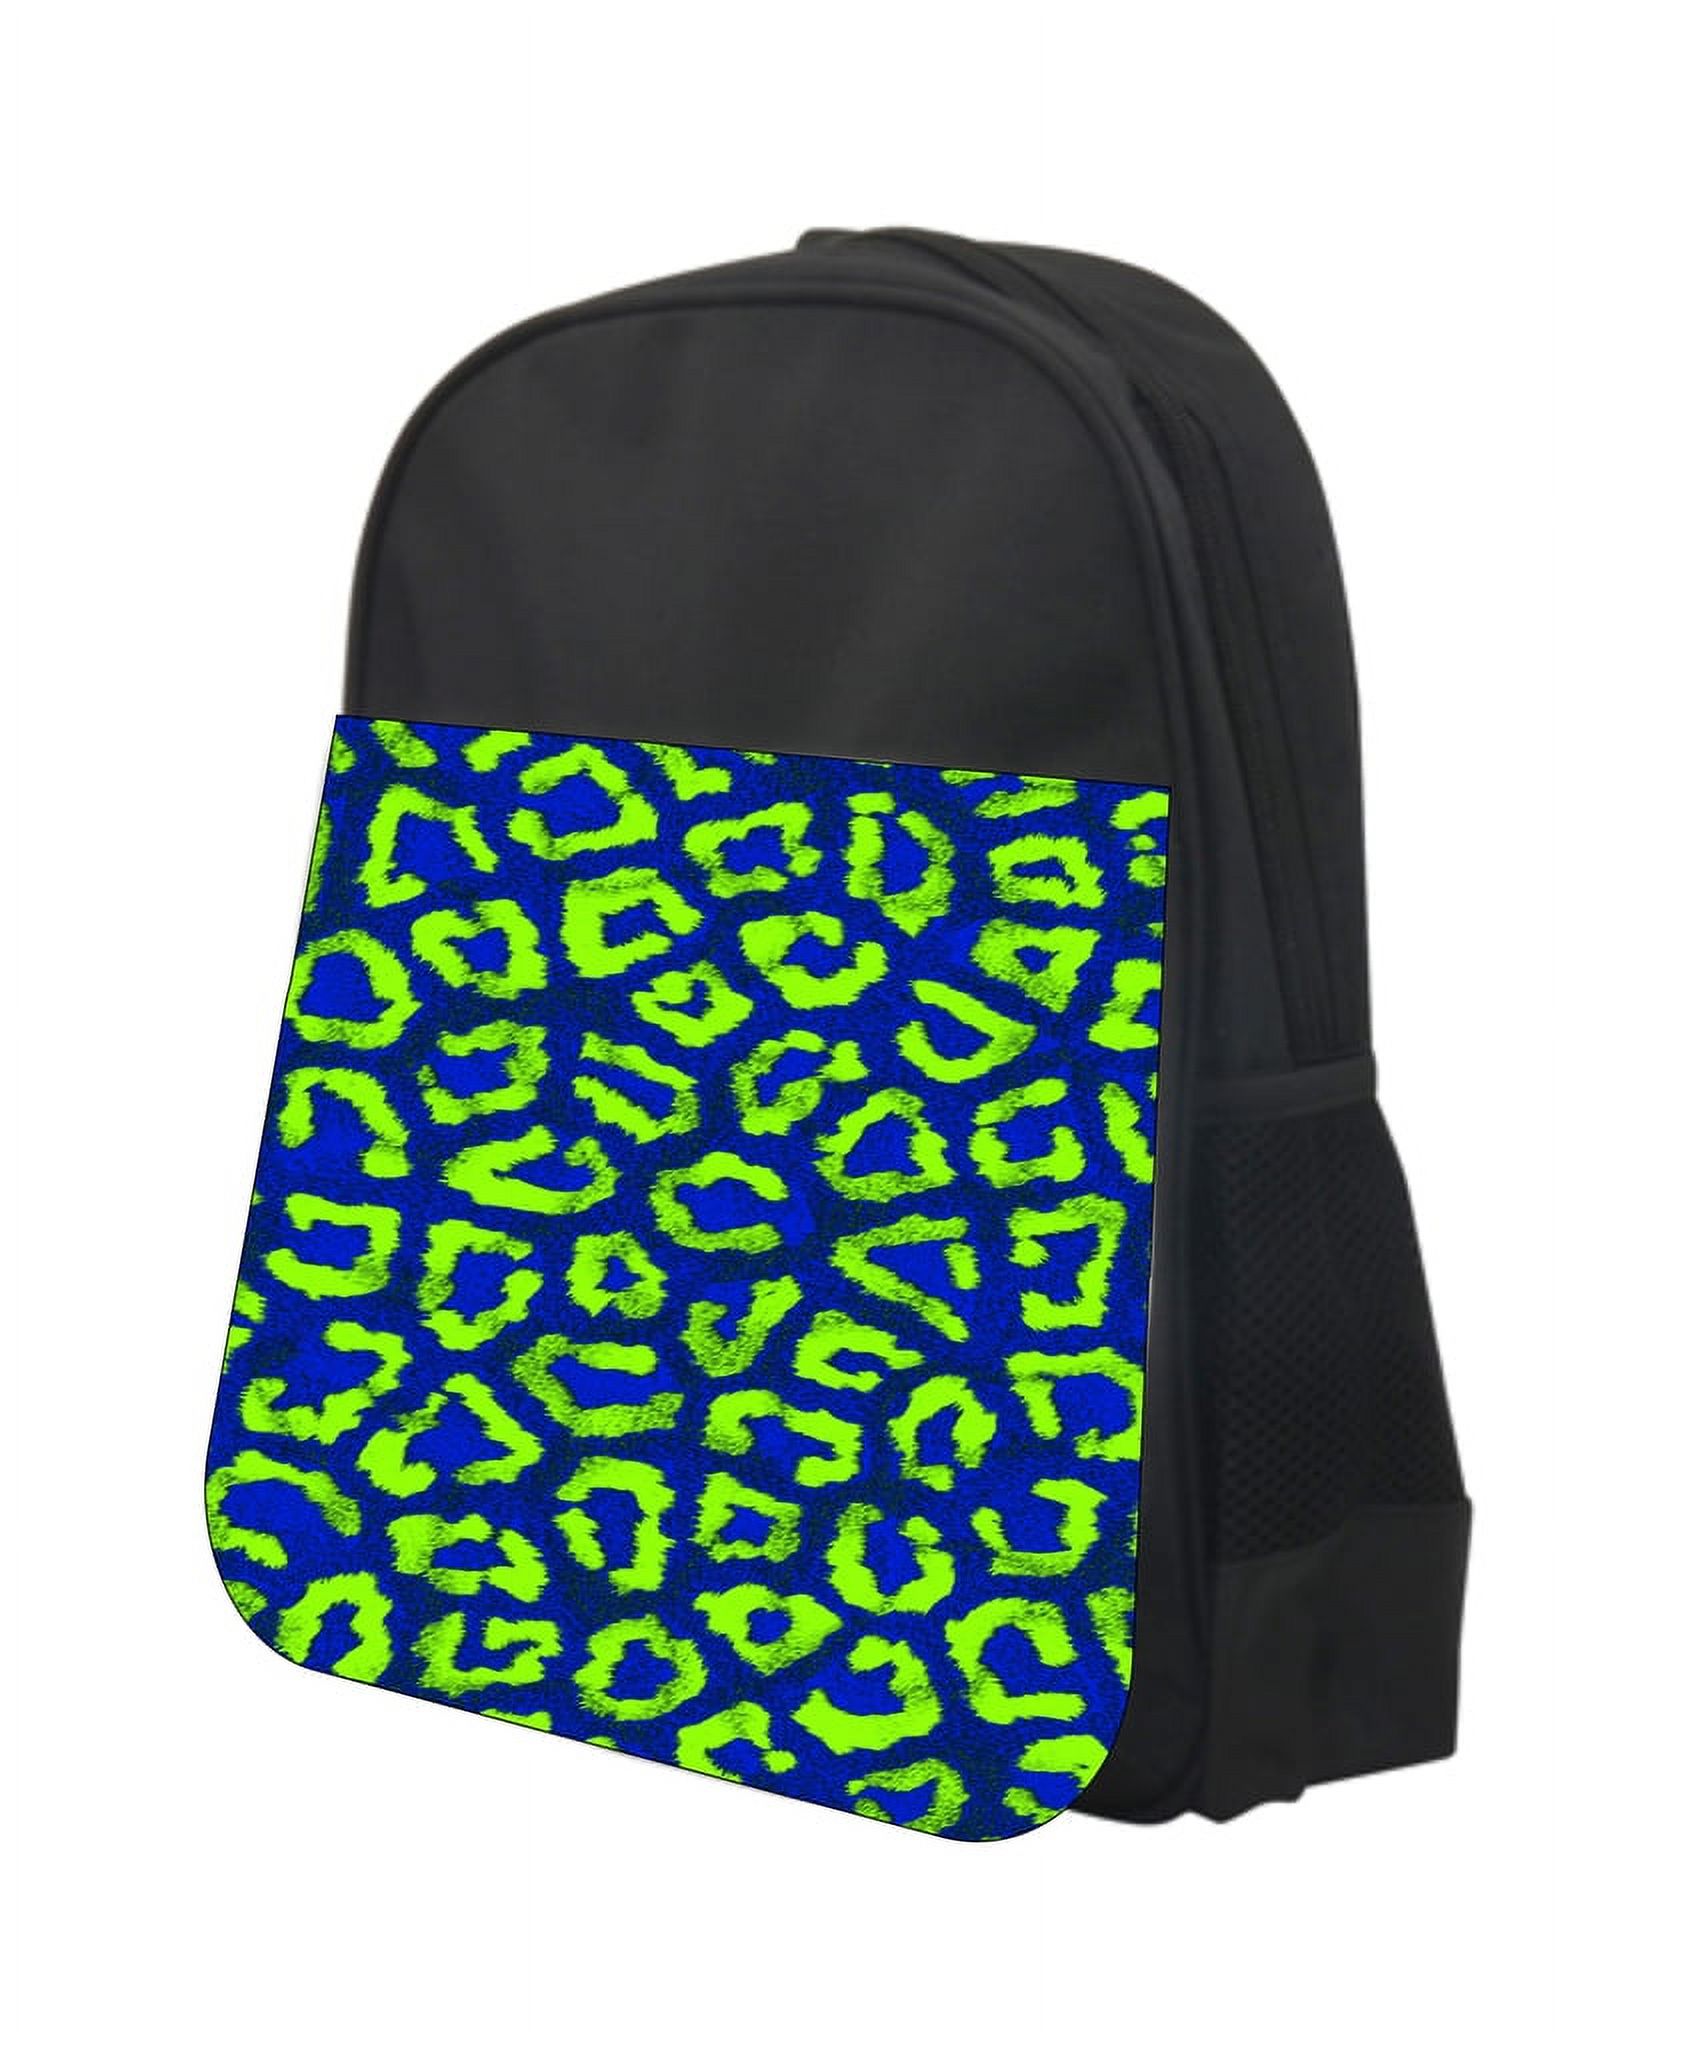 Green And Blue Leopard Print 13" x 10" Black Preschool Toddler Children's Backpack - image 1 of 2